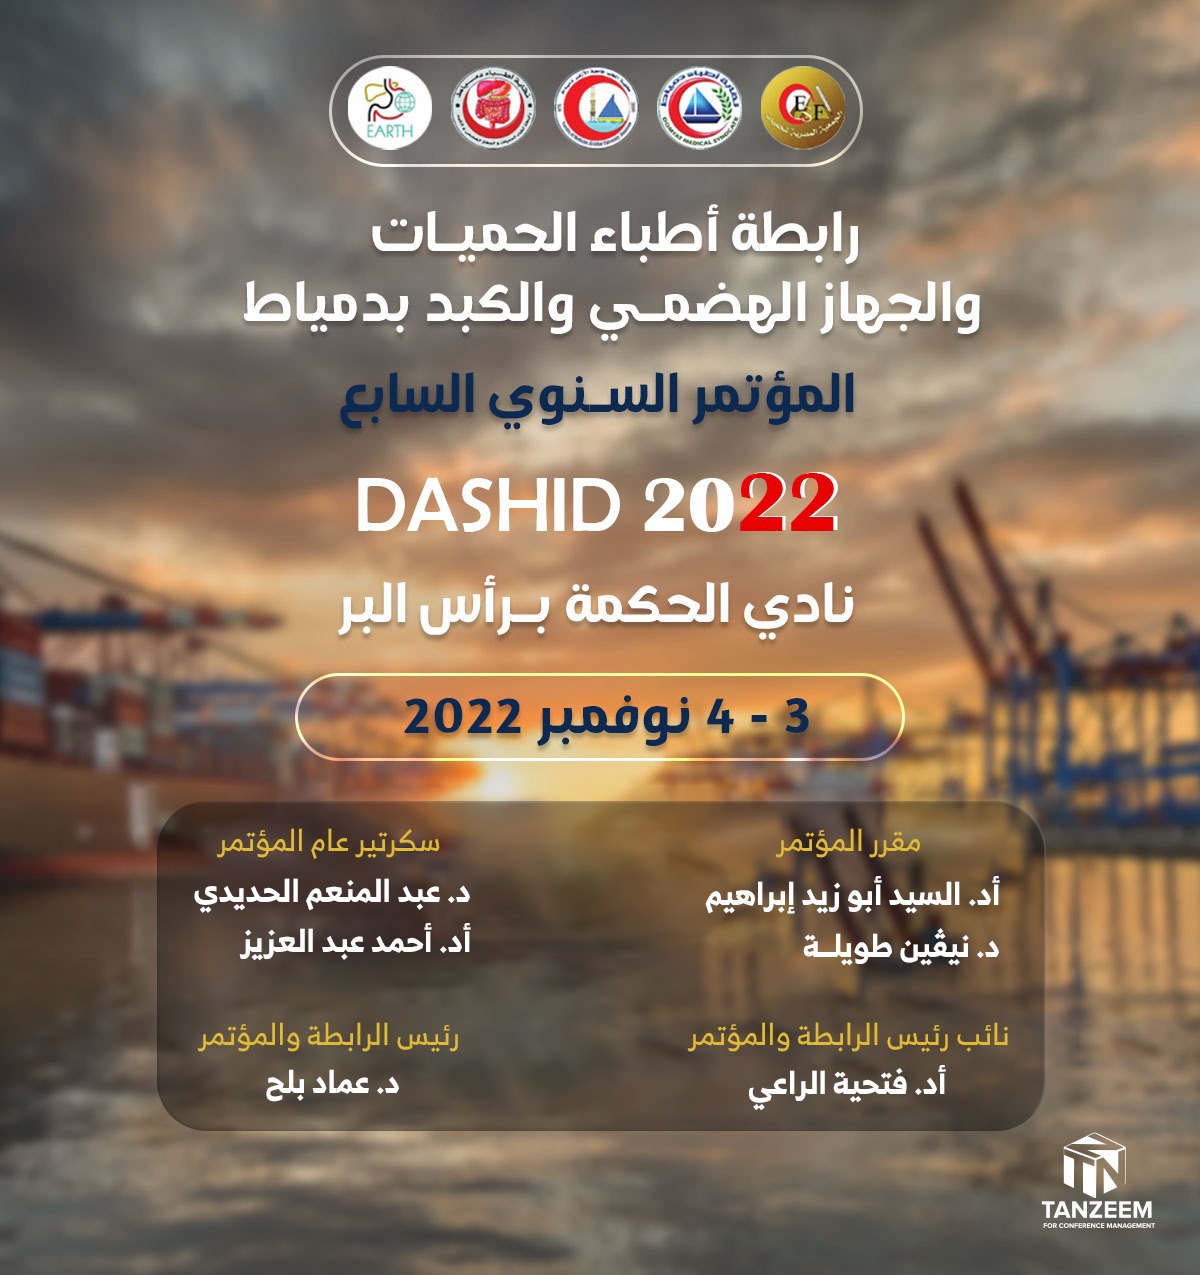 DASHID 2022